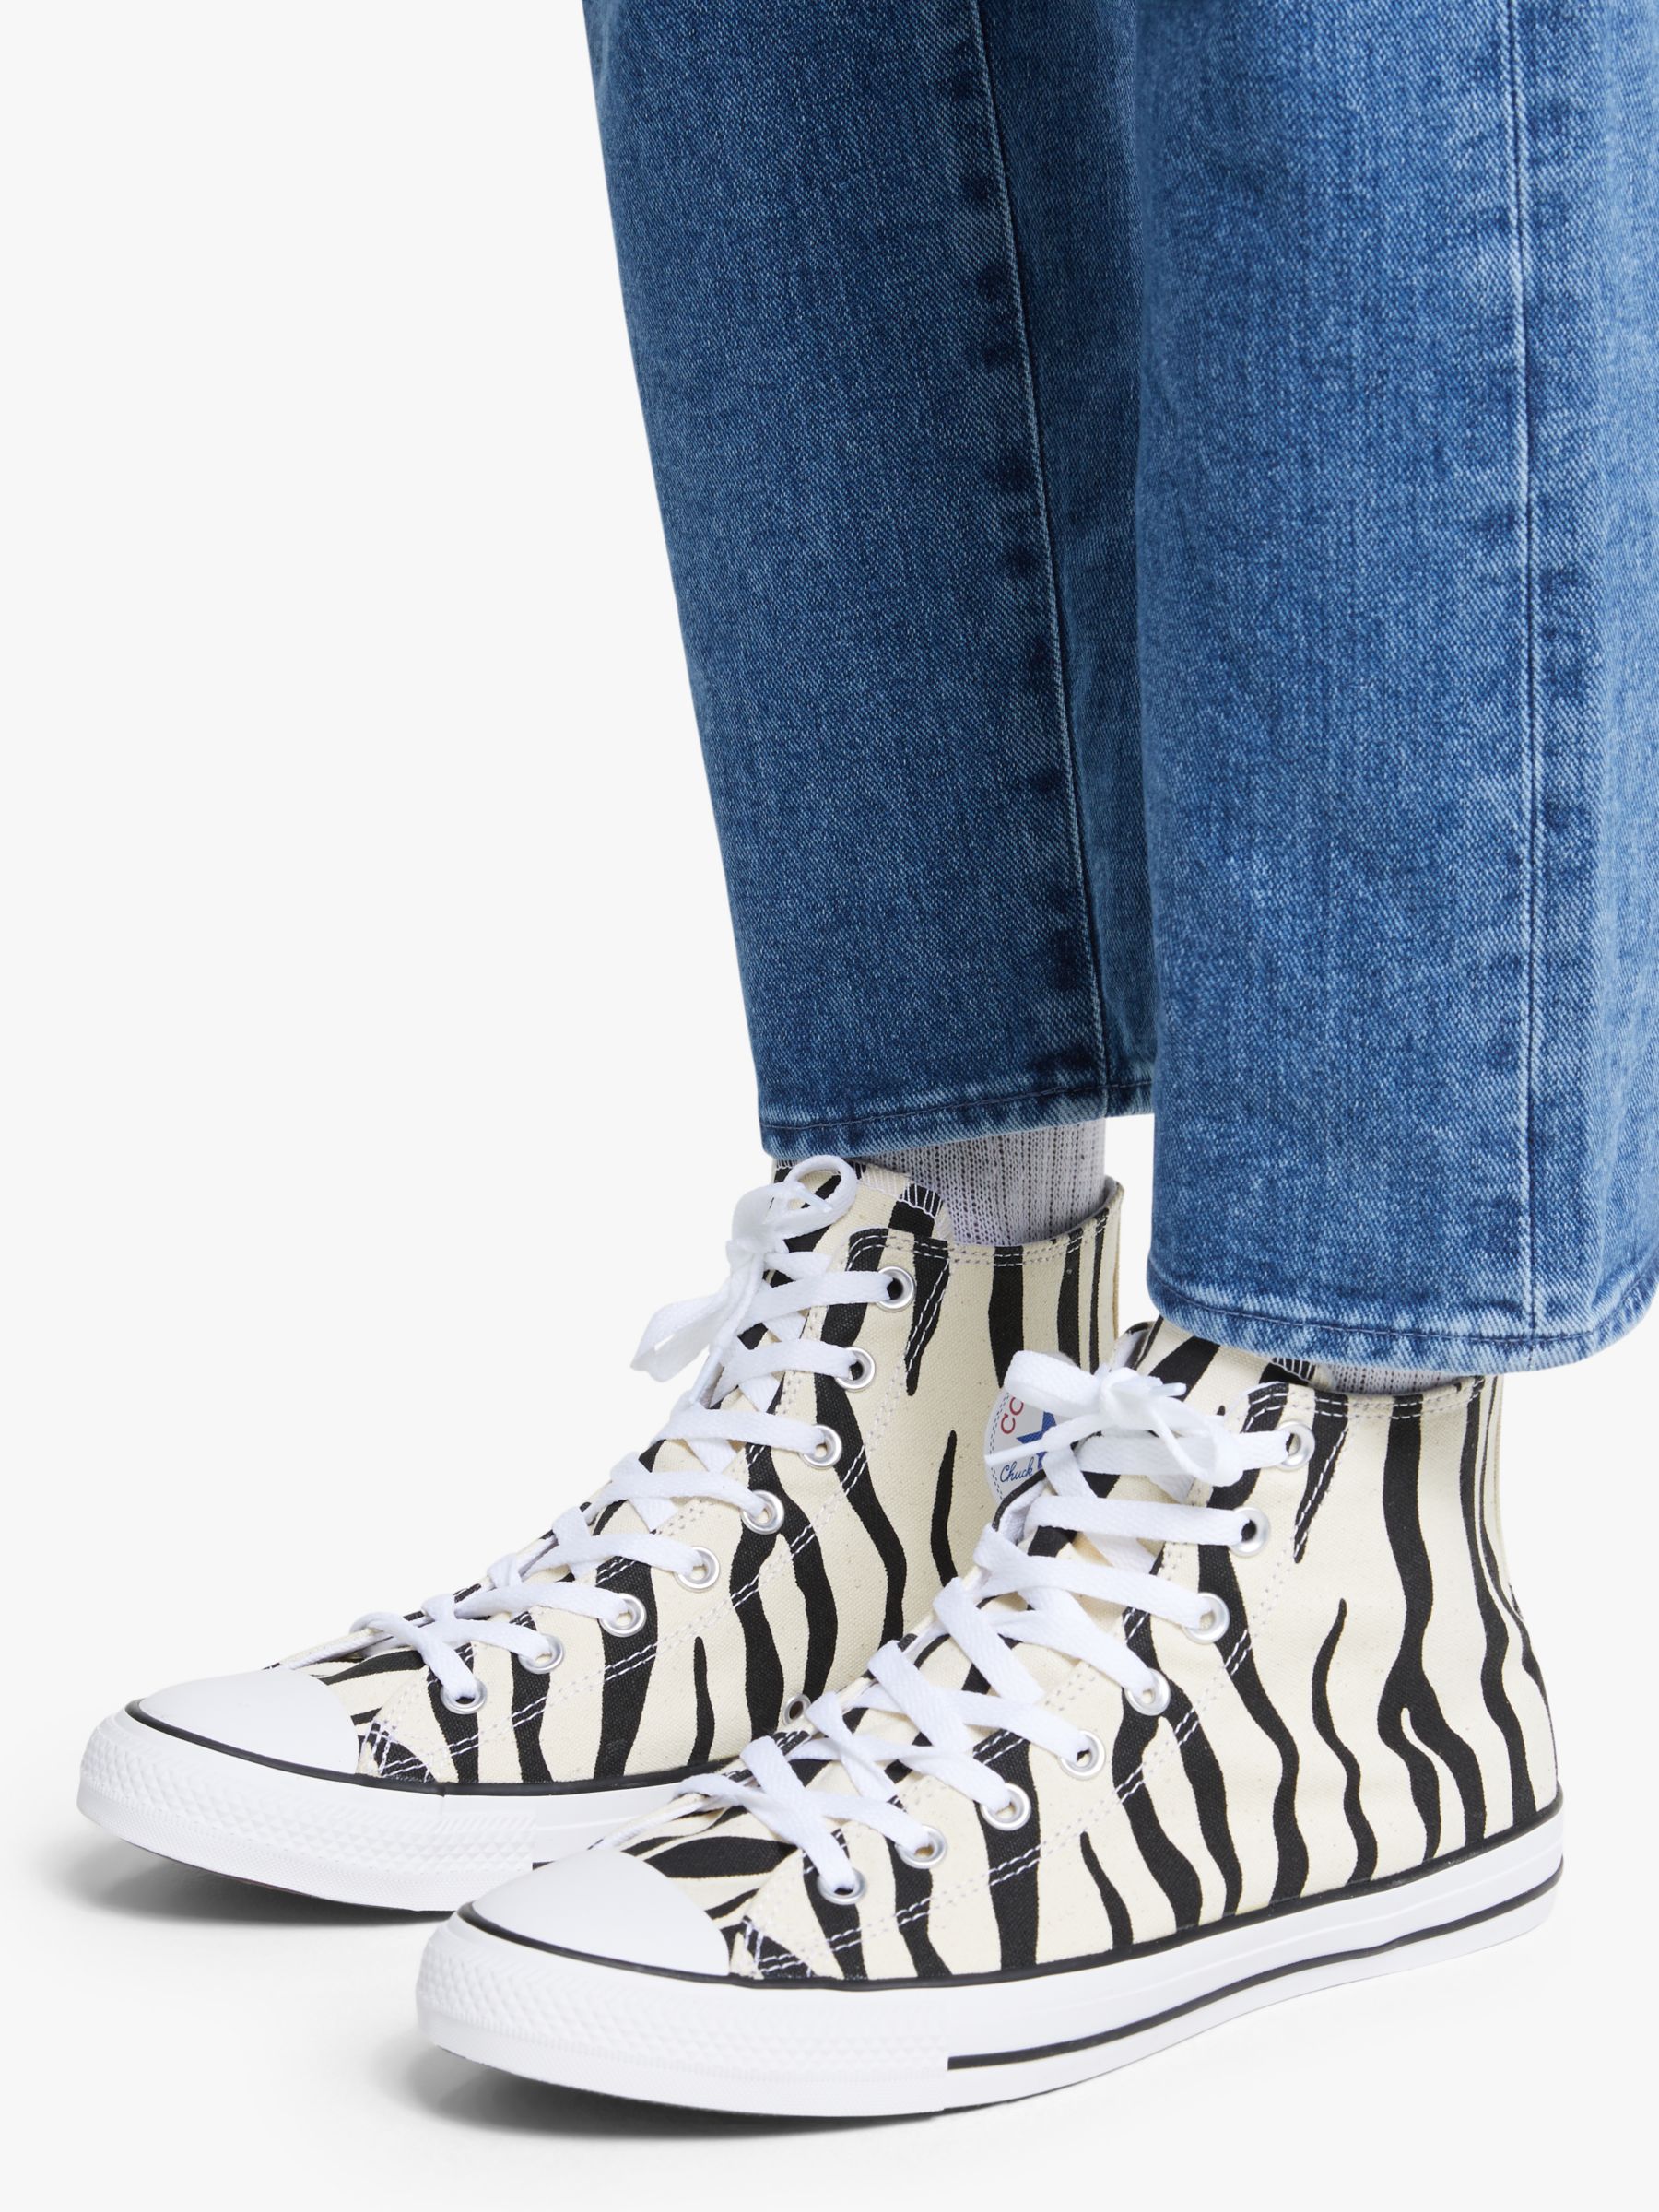 zebra print converse high tops